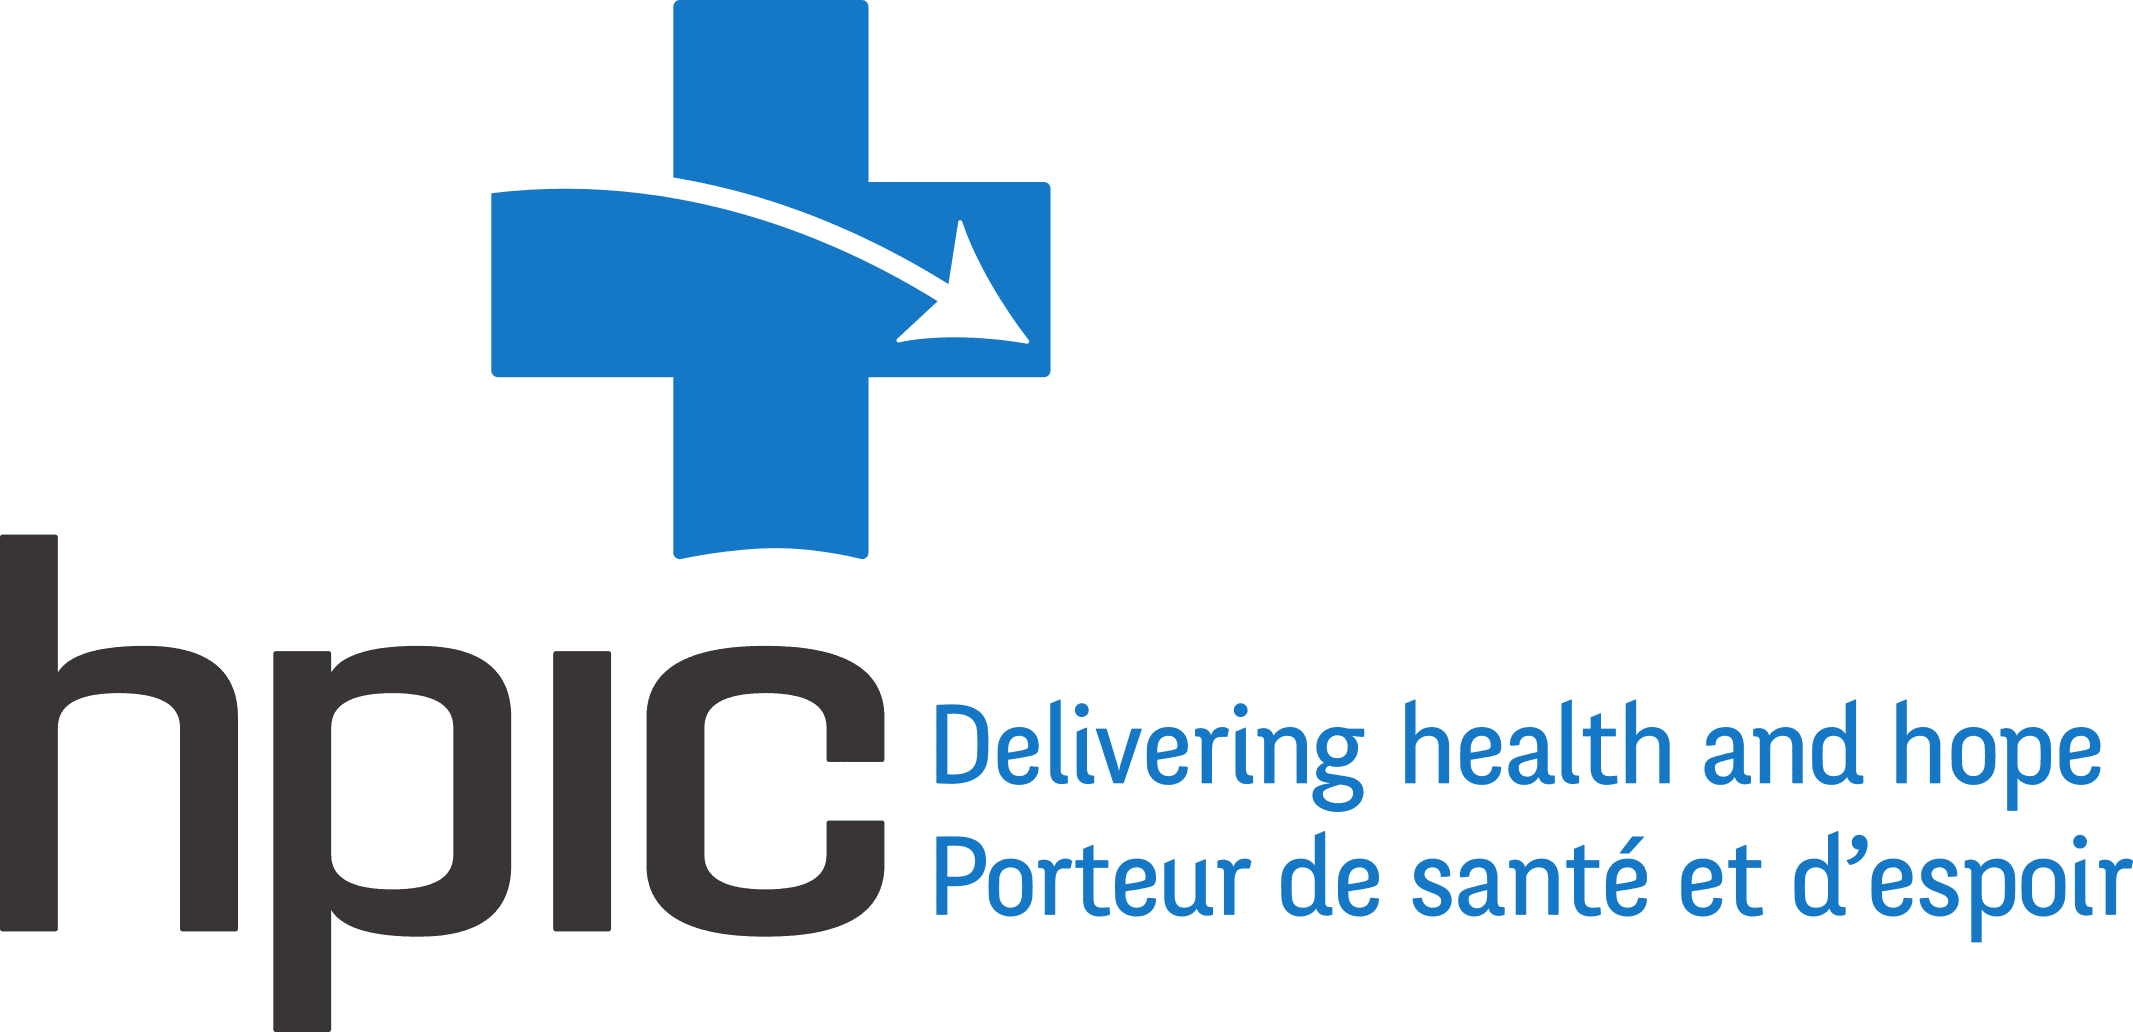 HPIC - delivering health and hope logo